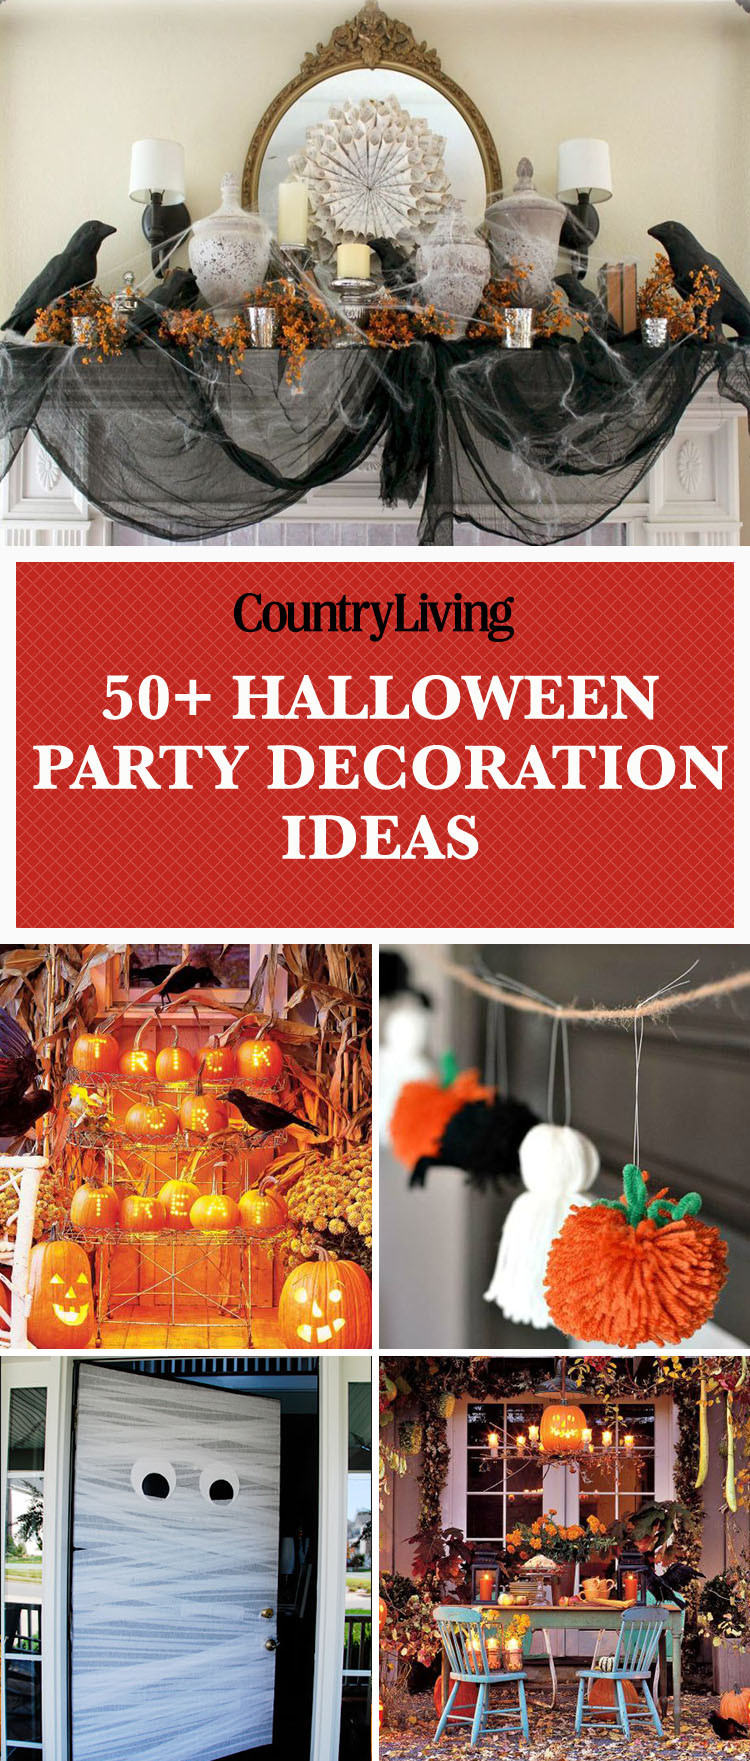 Spooky Halloween Party Ideas
 56 Fun Halloween Party Decorating Ideas Spooky Halloween